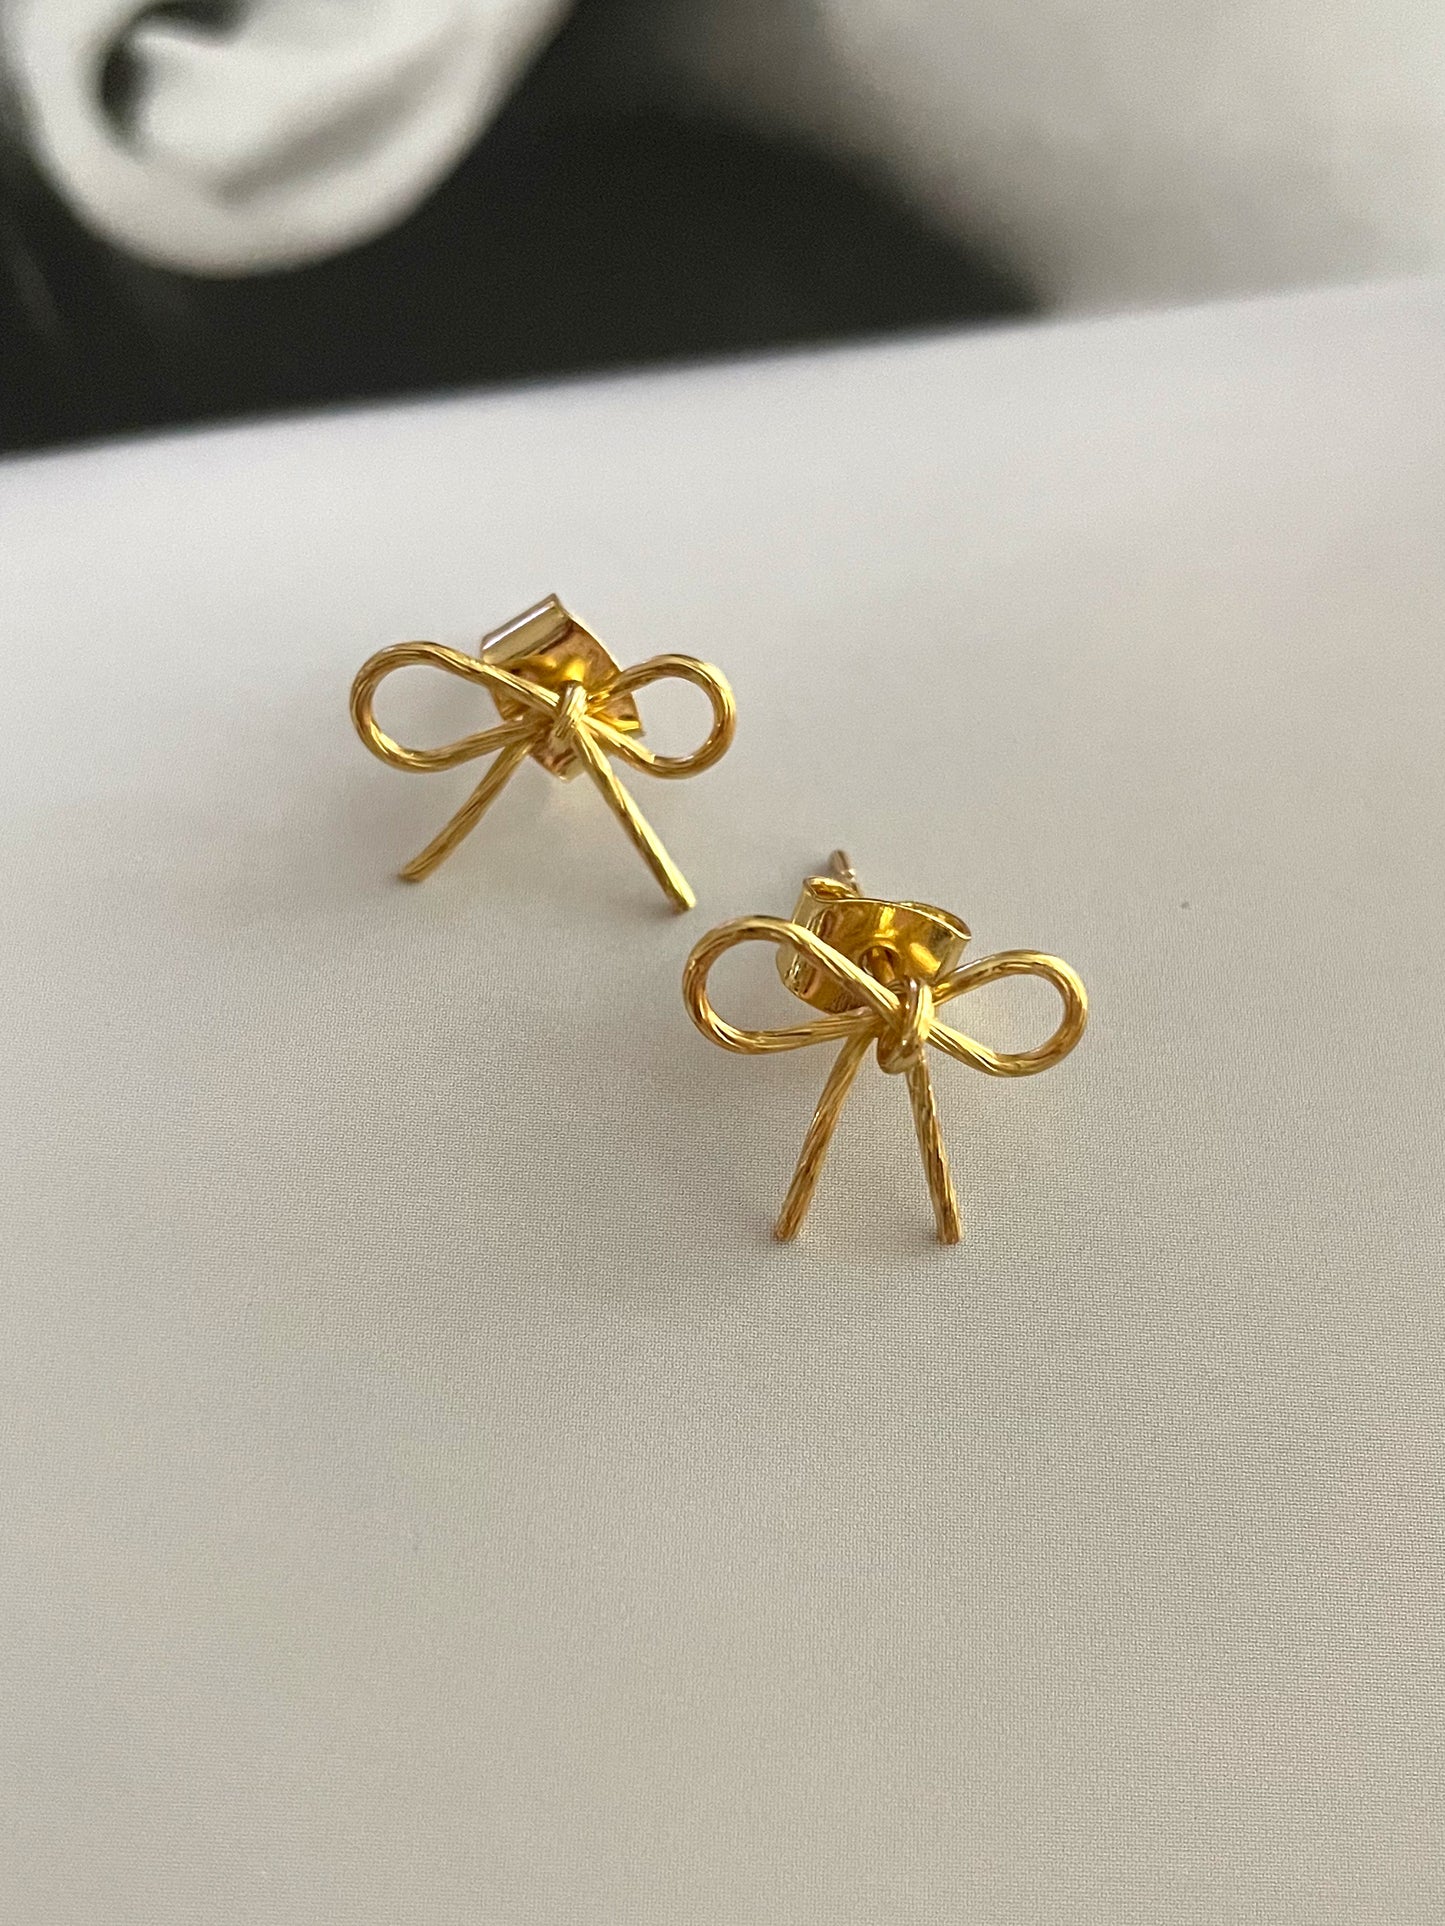 The Bow earrings